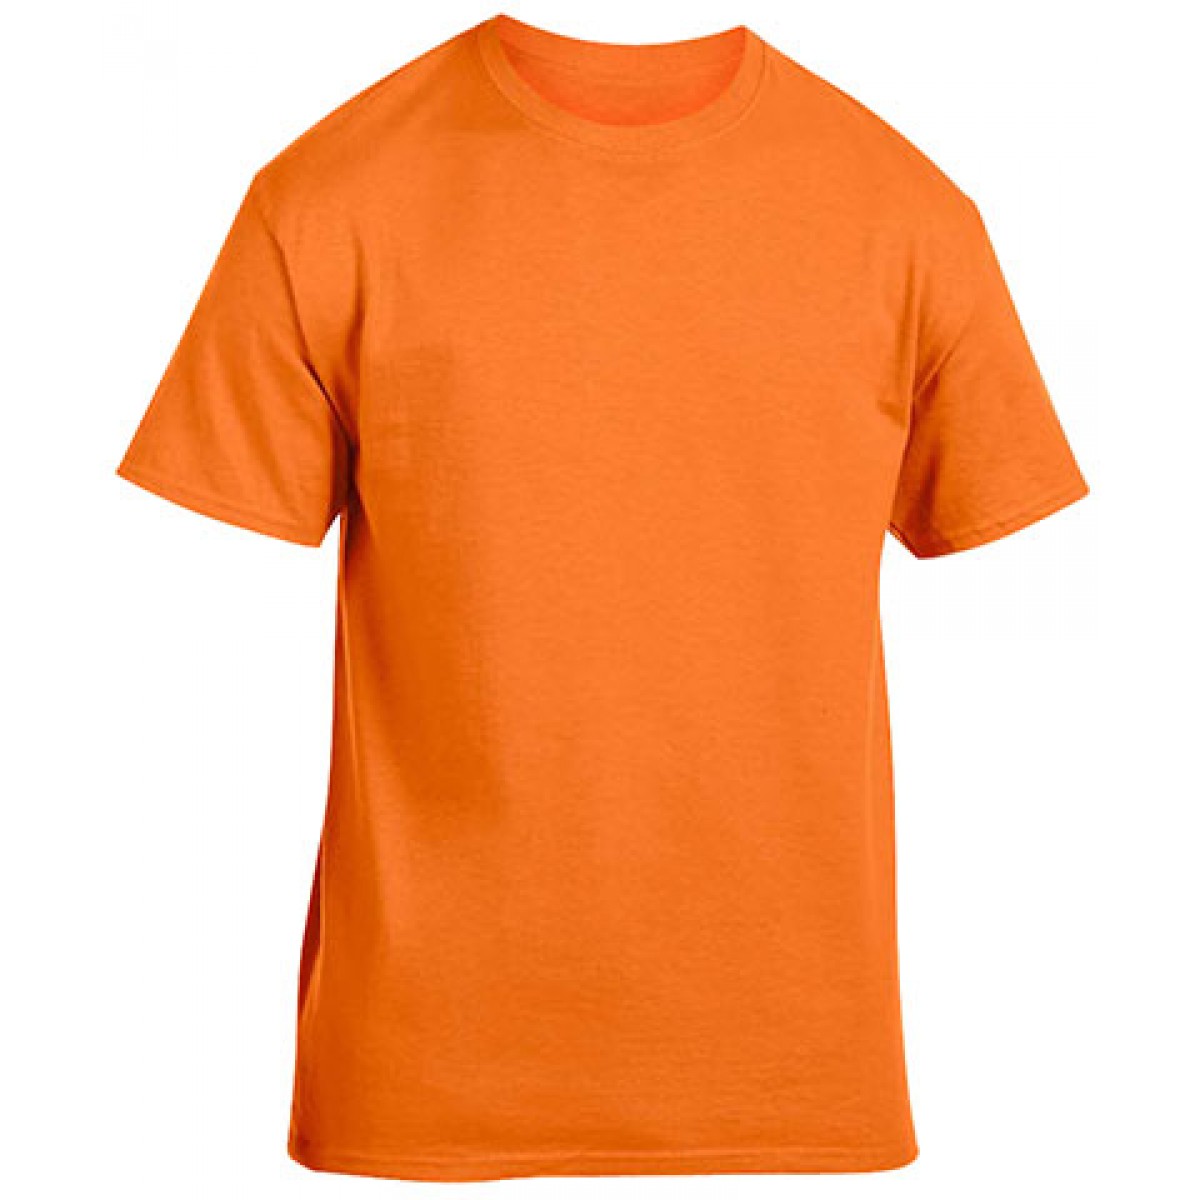 Cotton Short Sleeve T-Shirt-Safety Orange-L